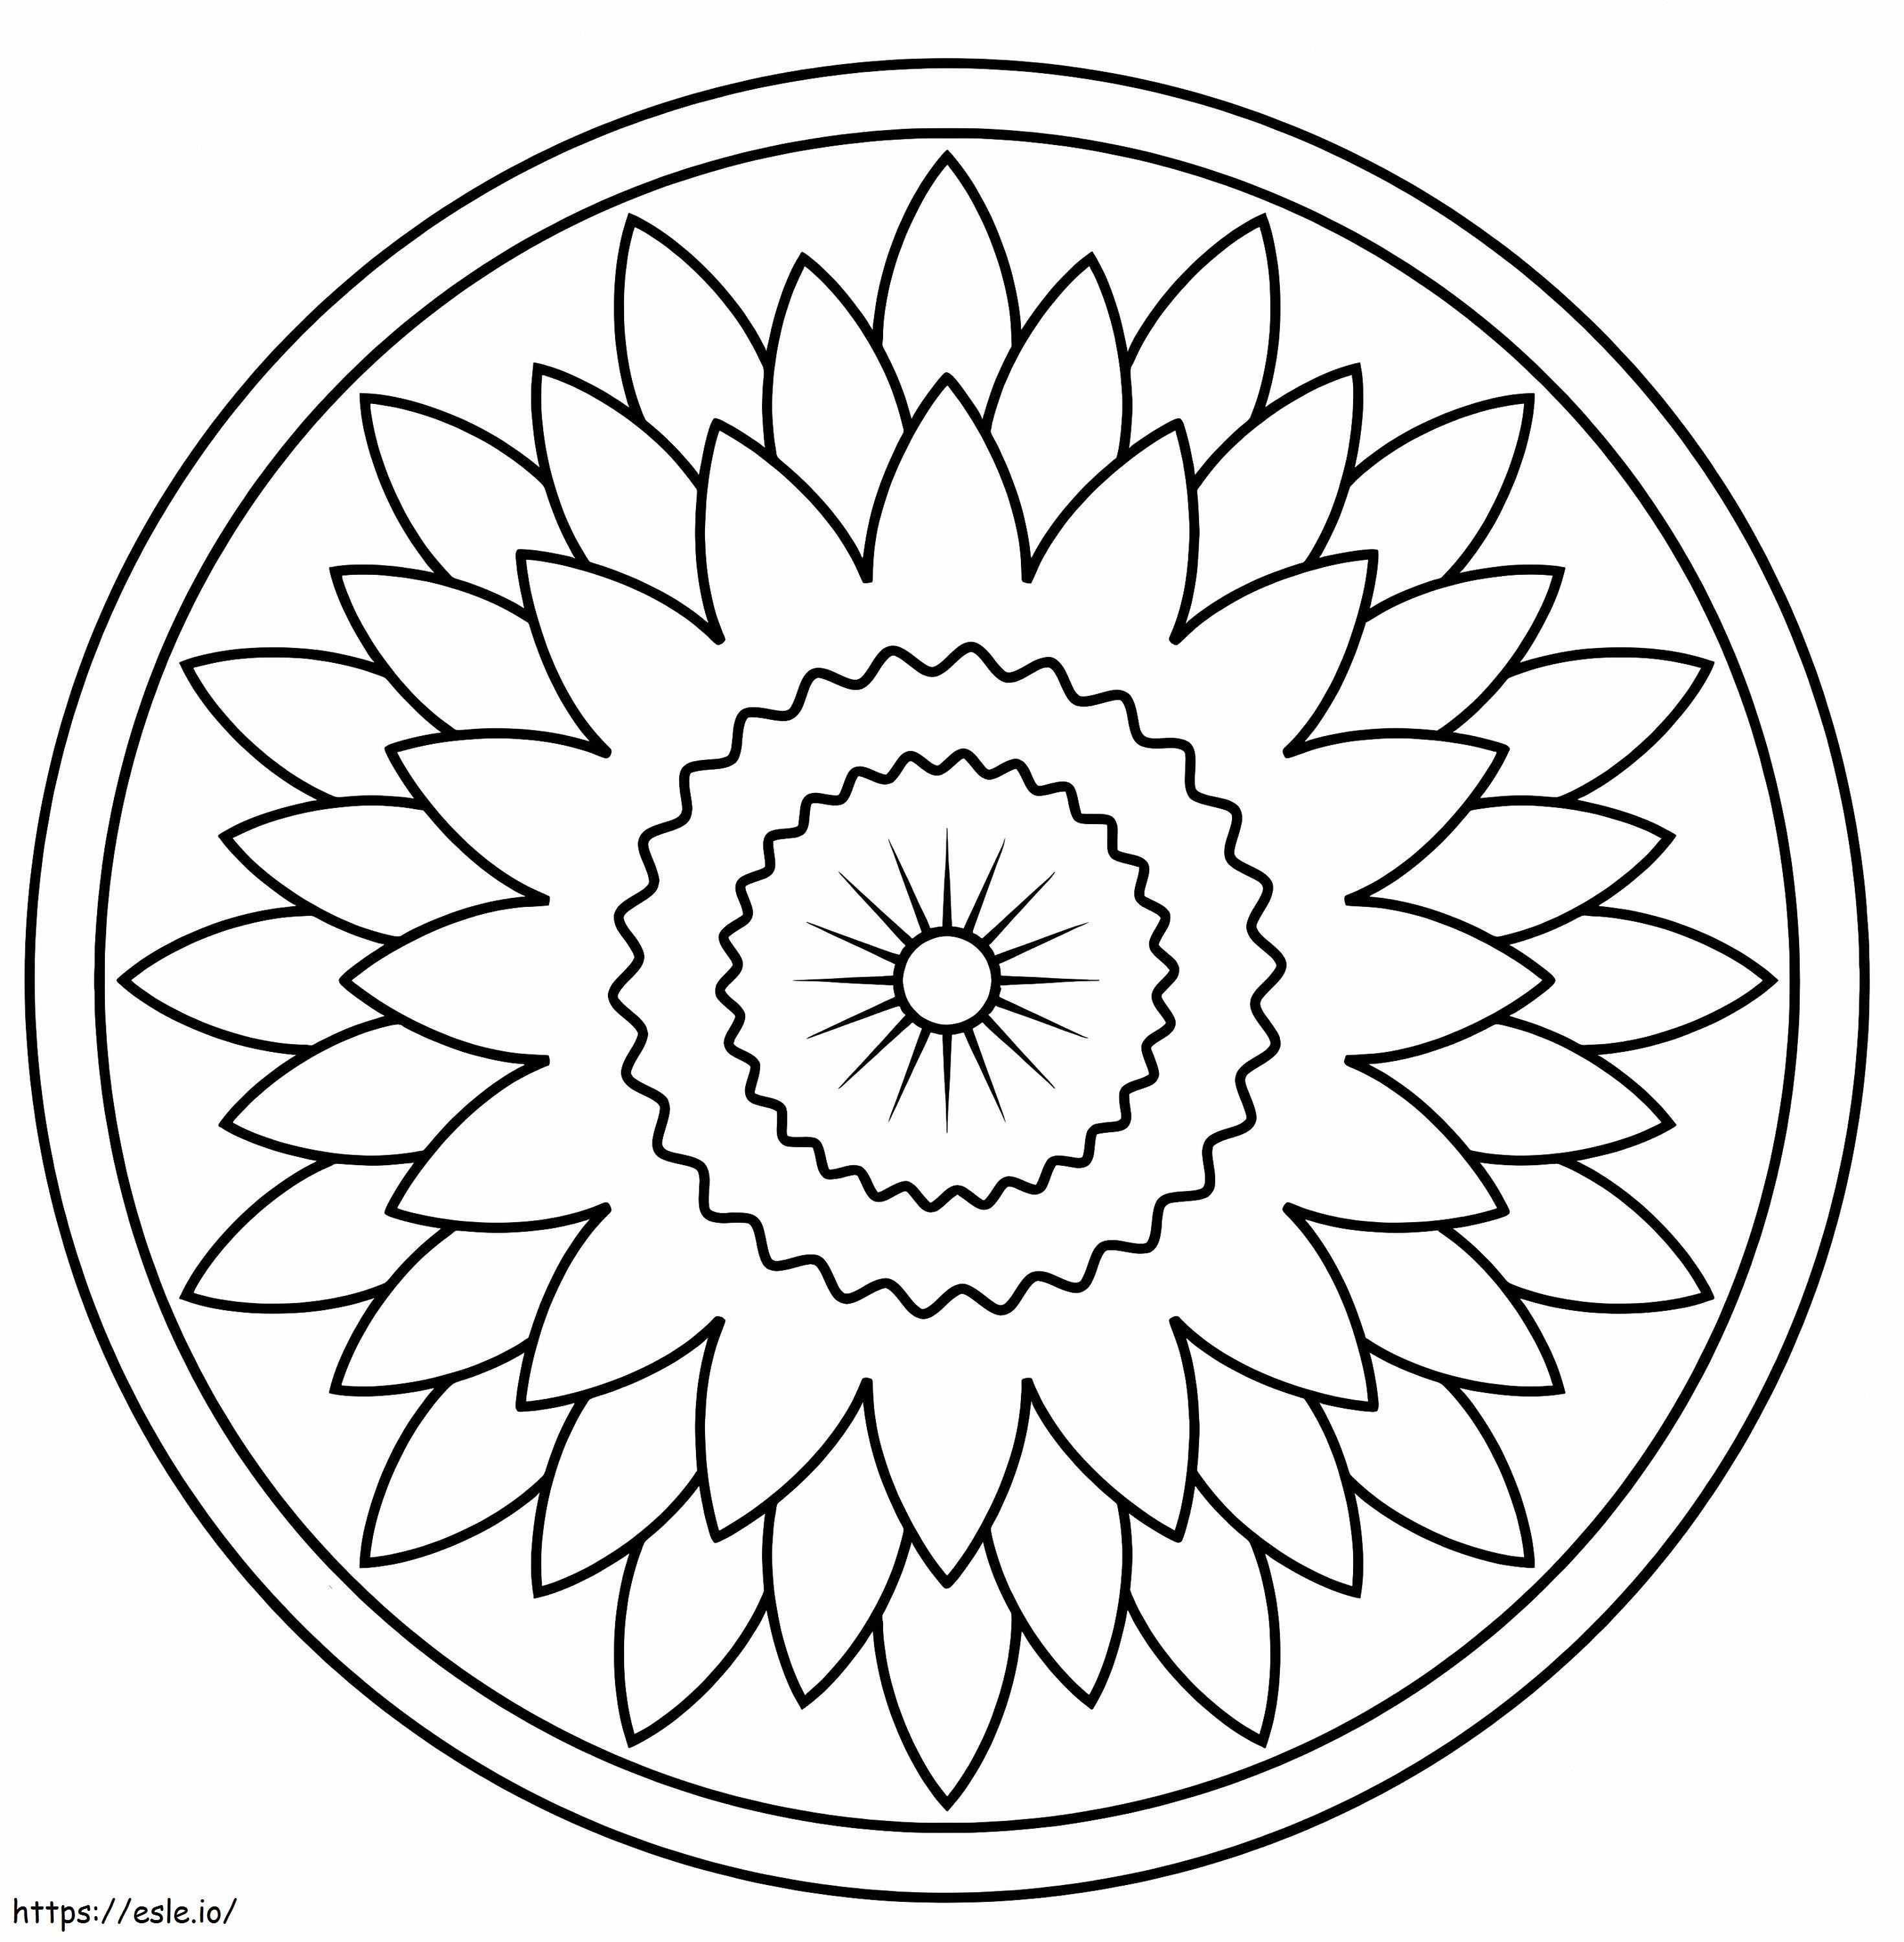 Amazing Flower Mandala coloring page